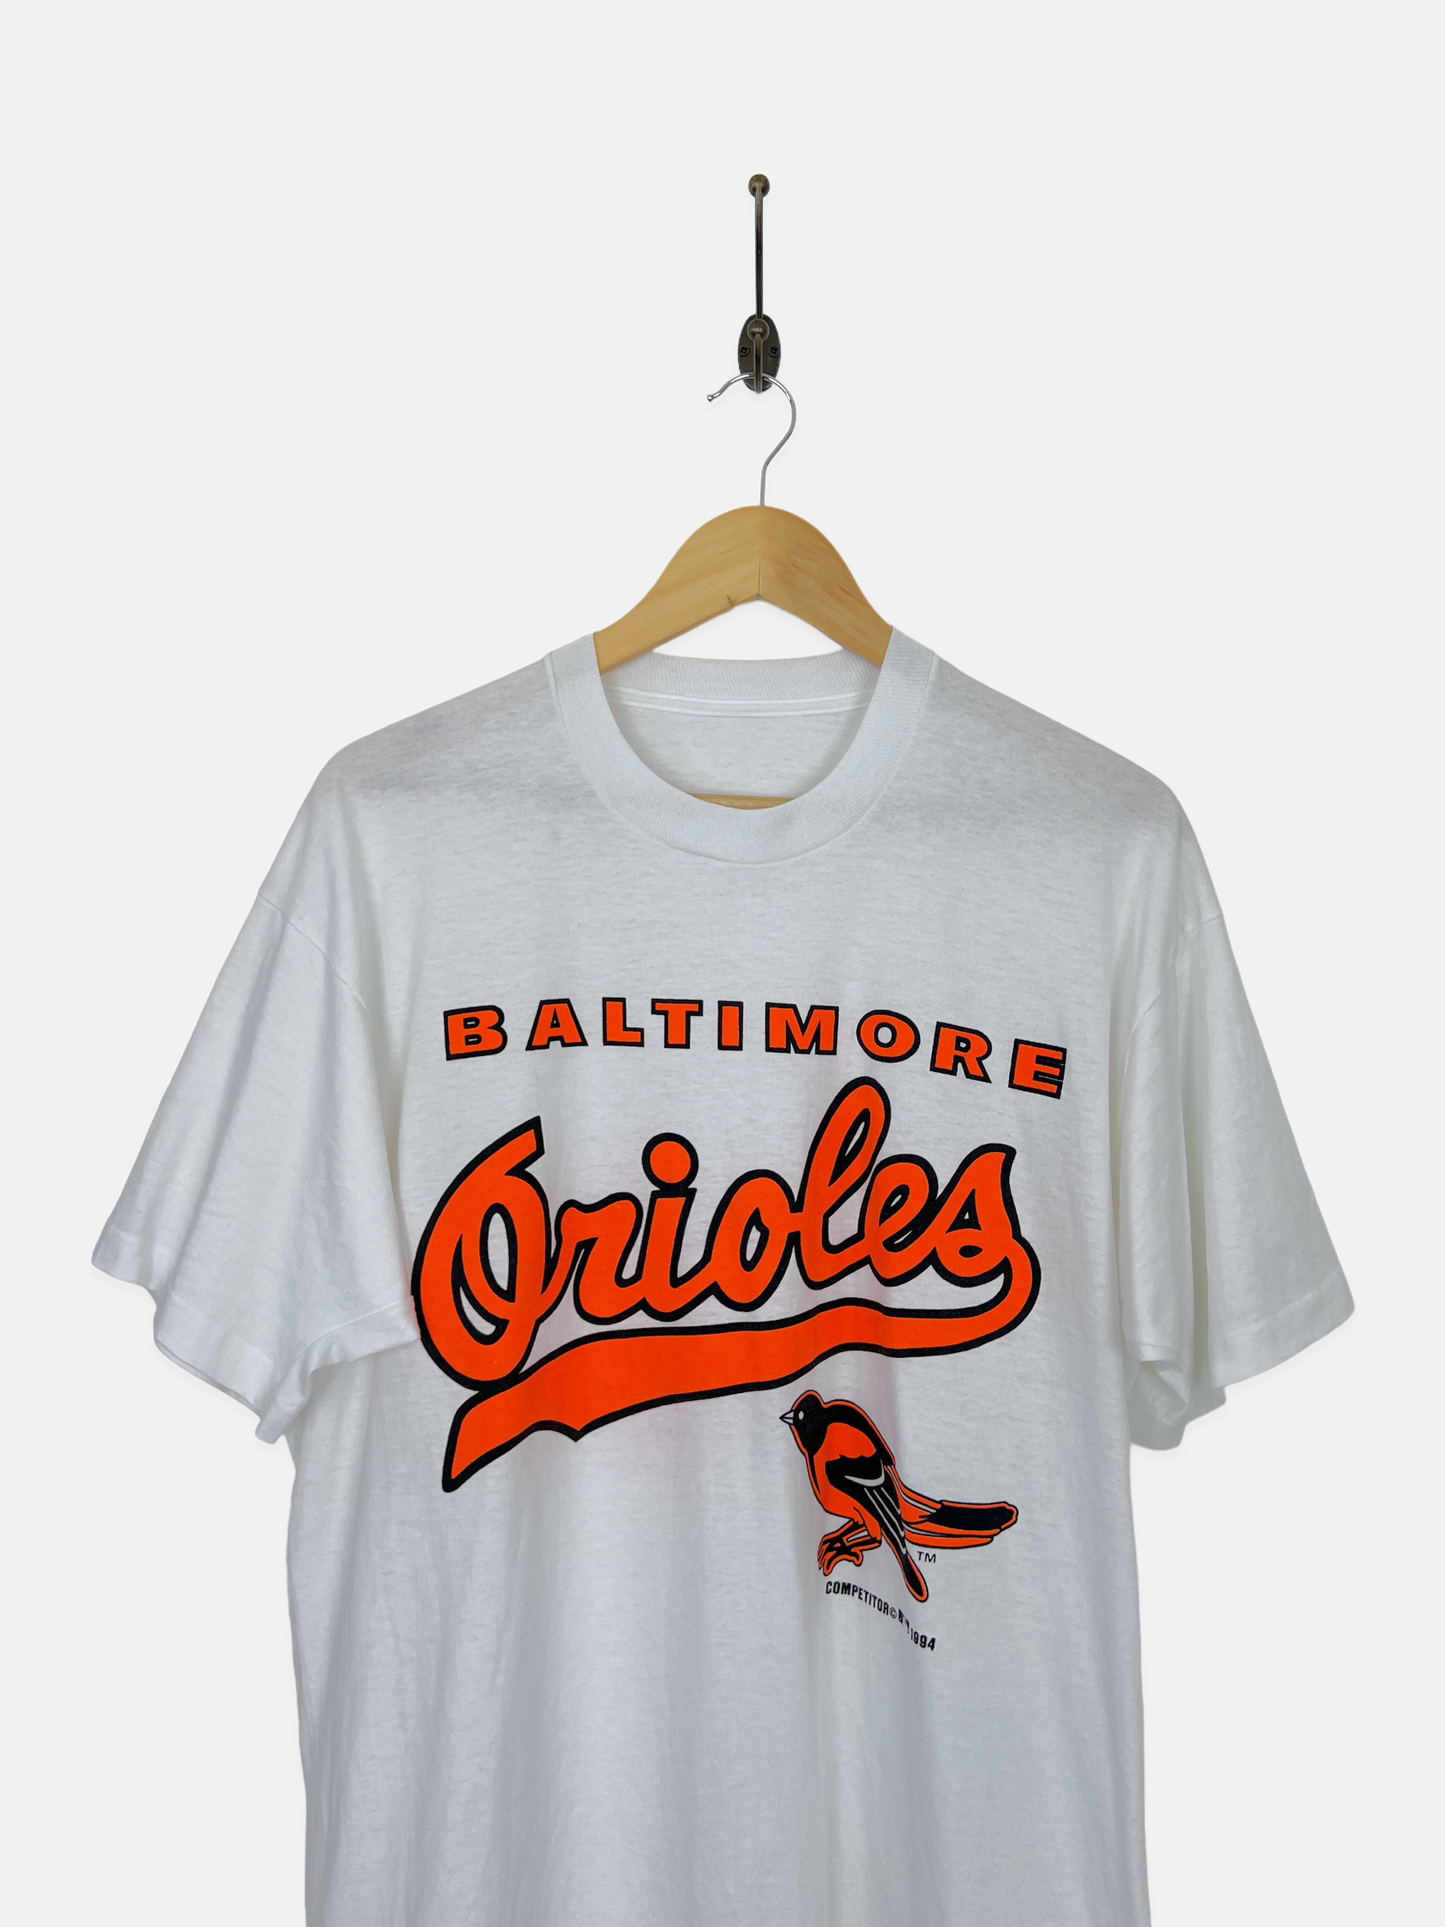 1994 Baltimore Orioles MLB Vintage T-Shirt Size L